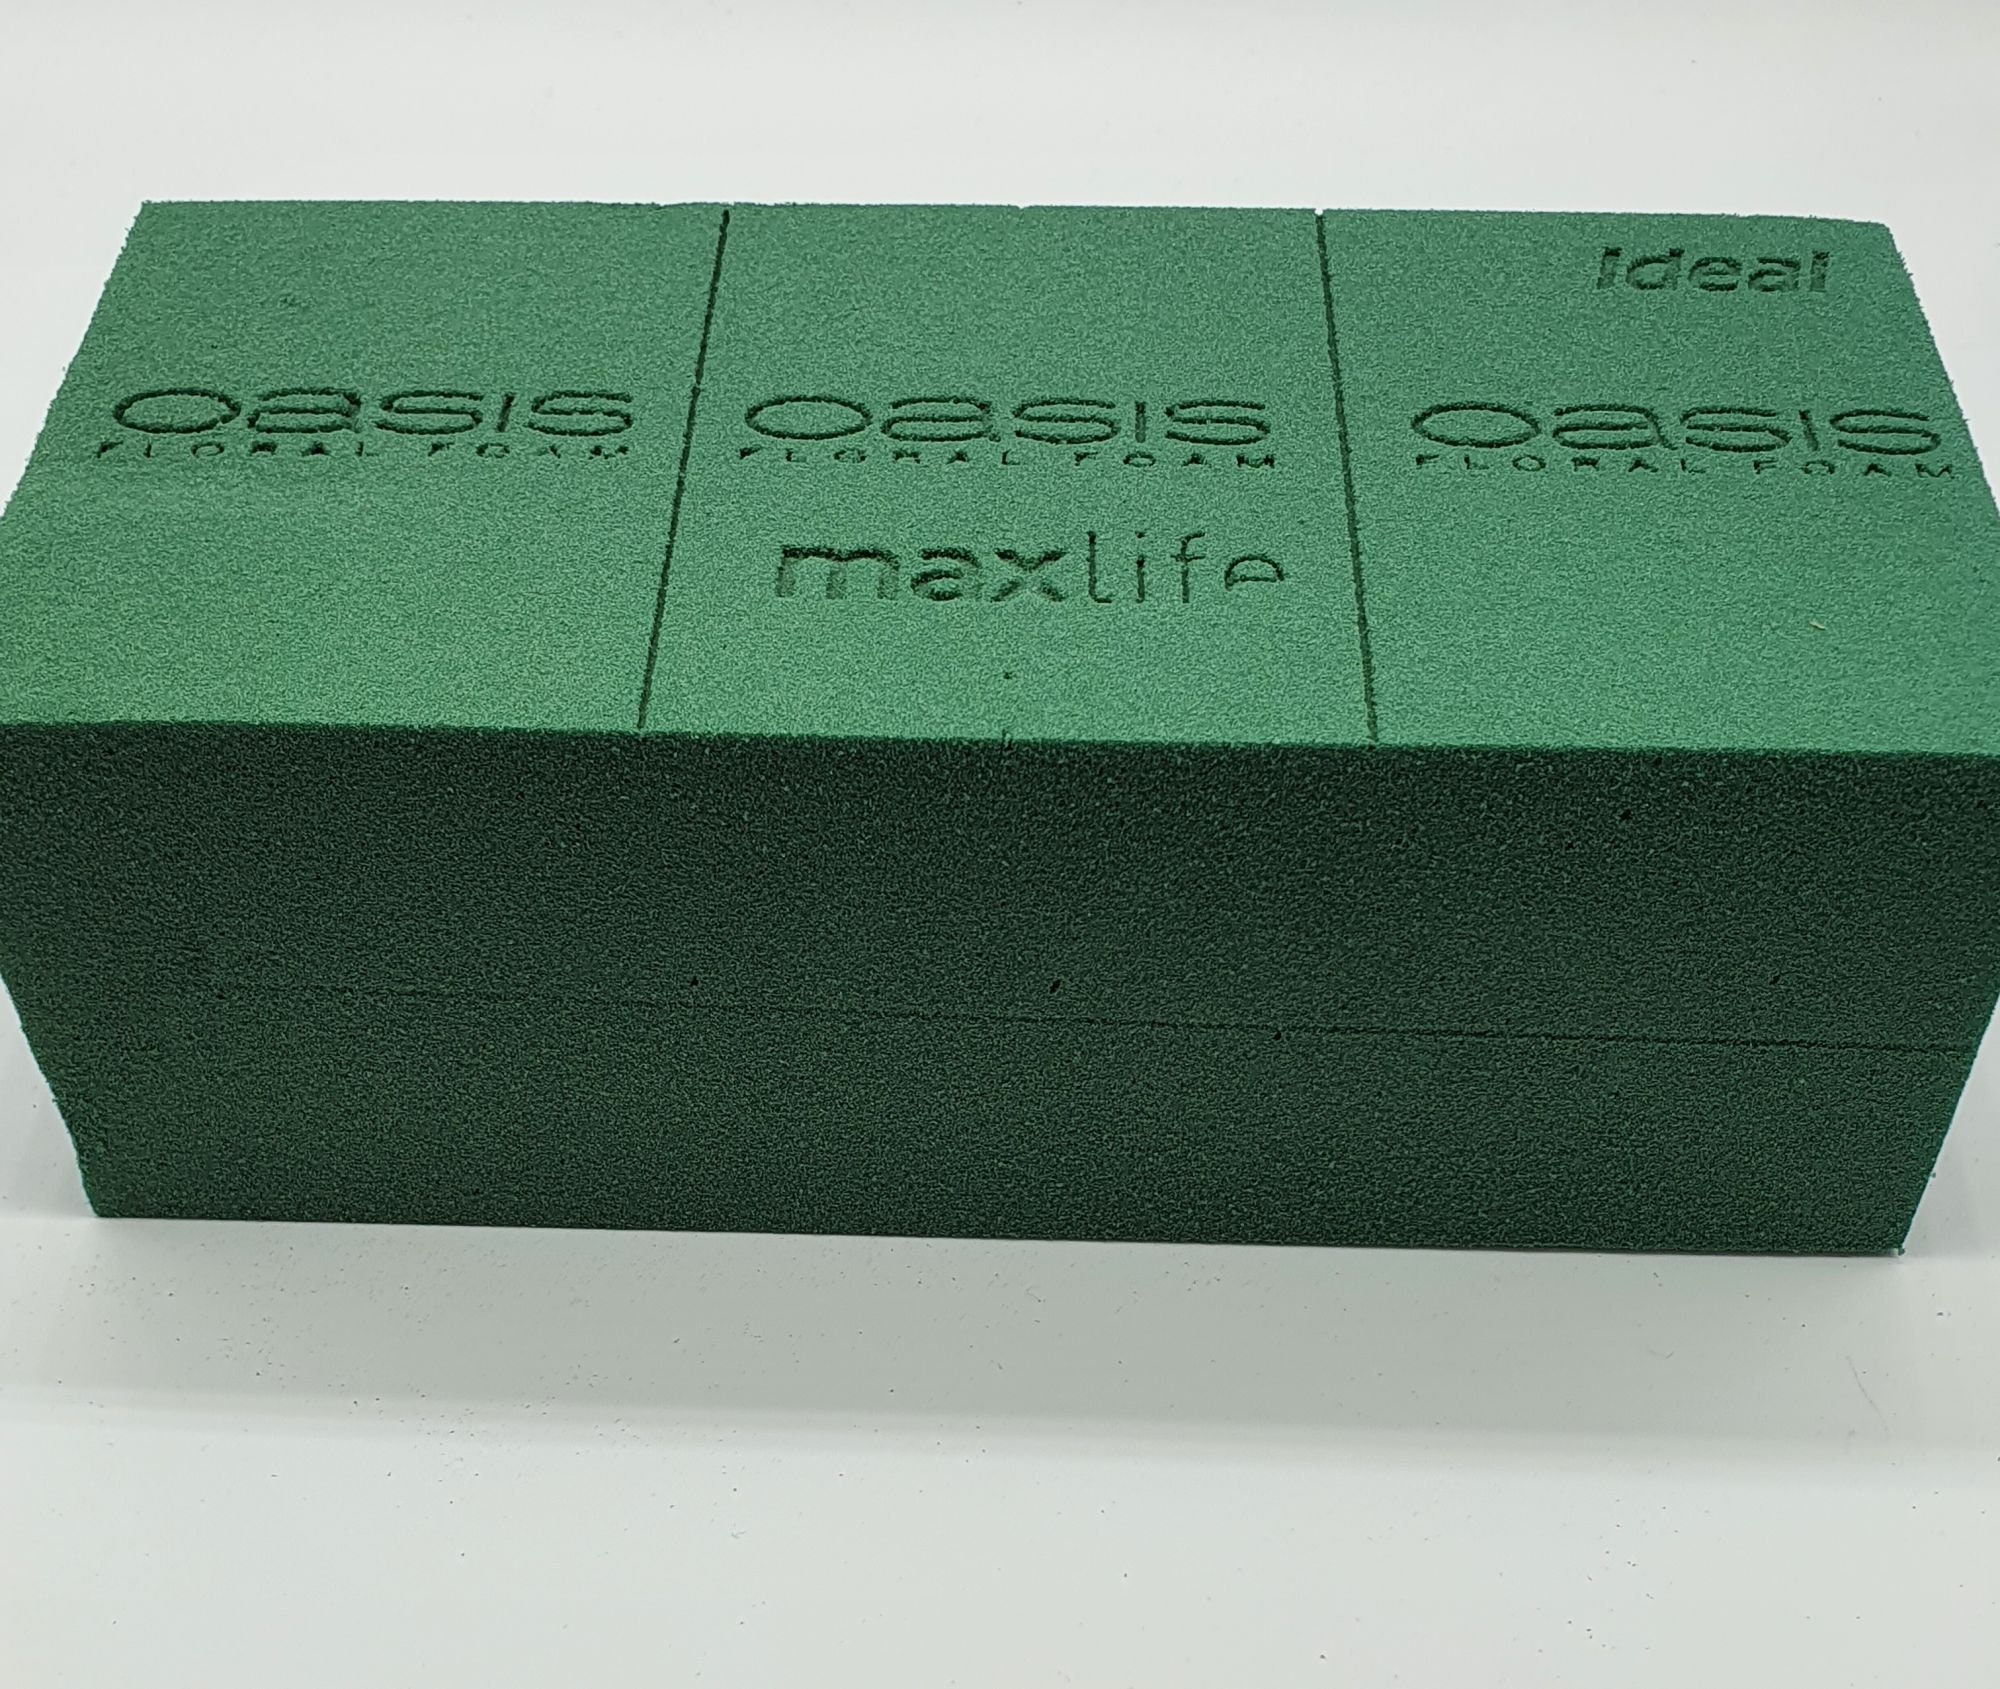 Oasis® Ideal Floral Foam Maxlife 1 Brick - Wet